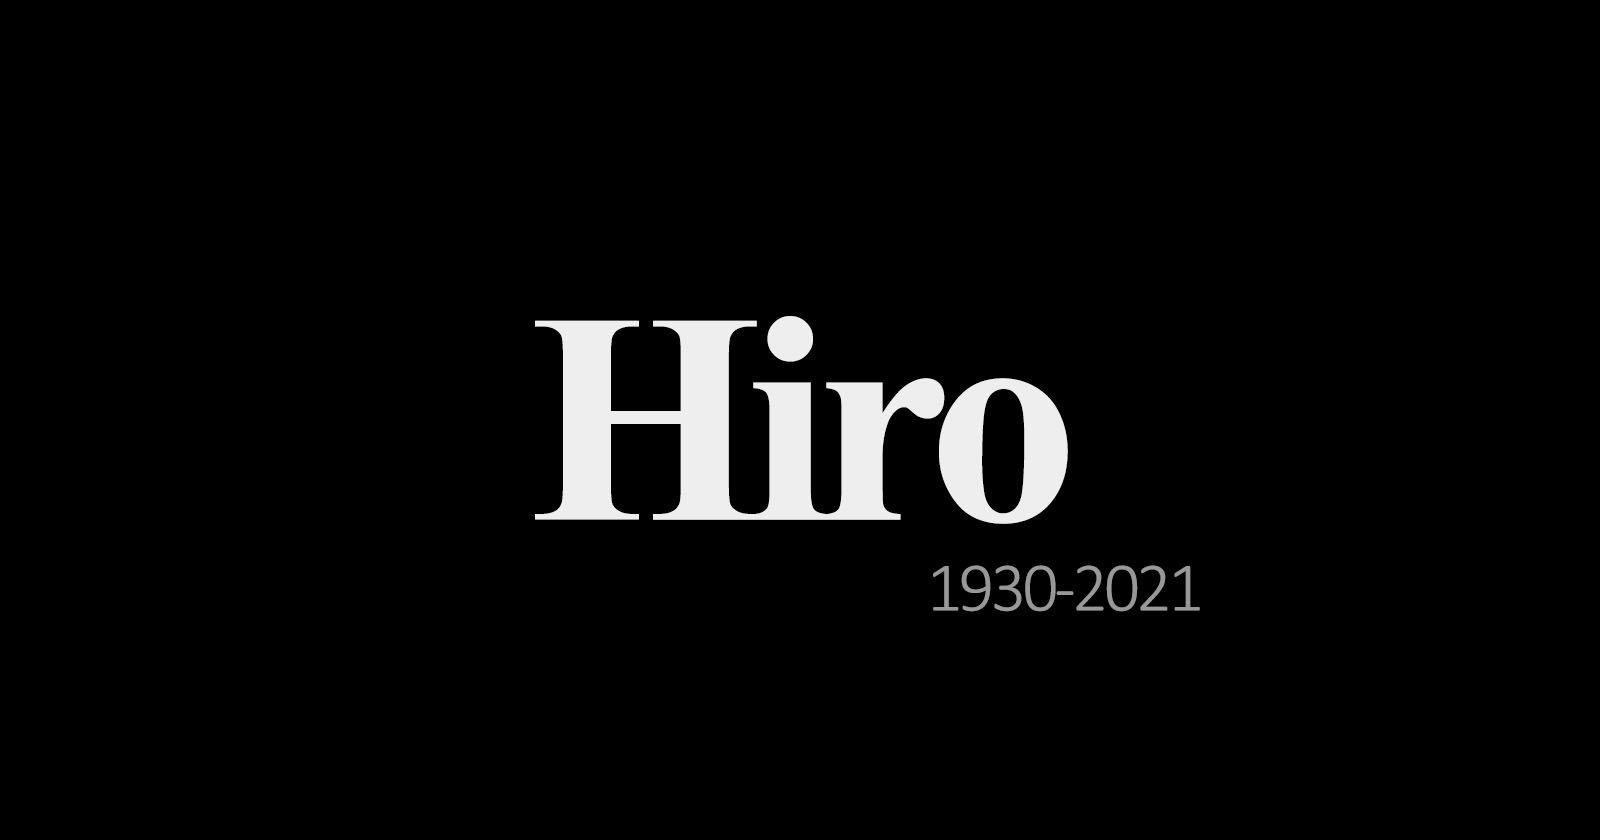 Renowned Fashion Photographer Hiro Passes Away At 90 | PetaPixel